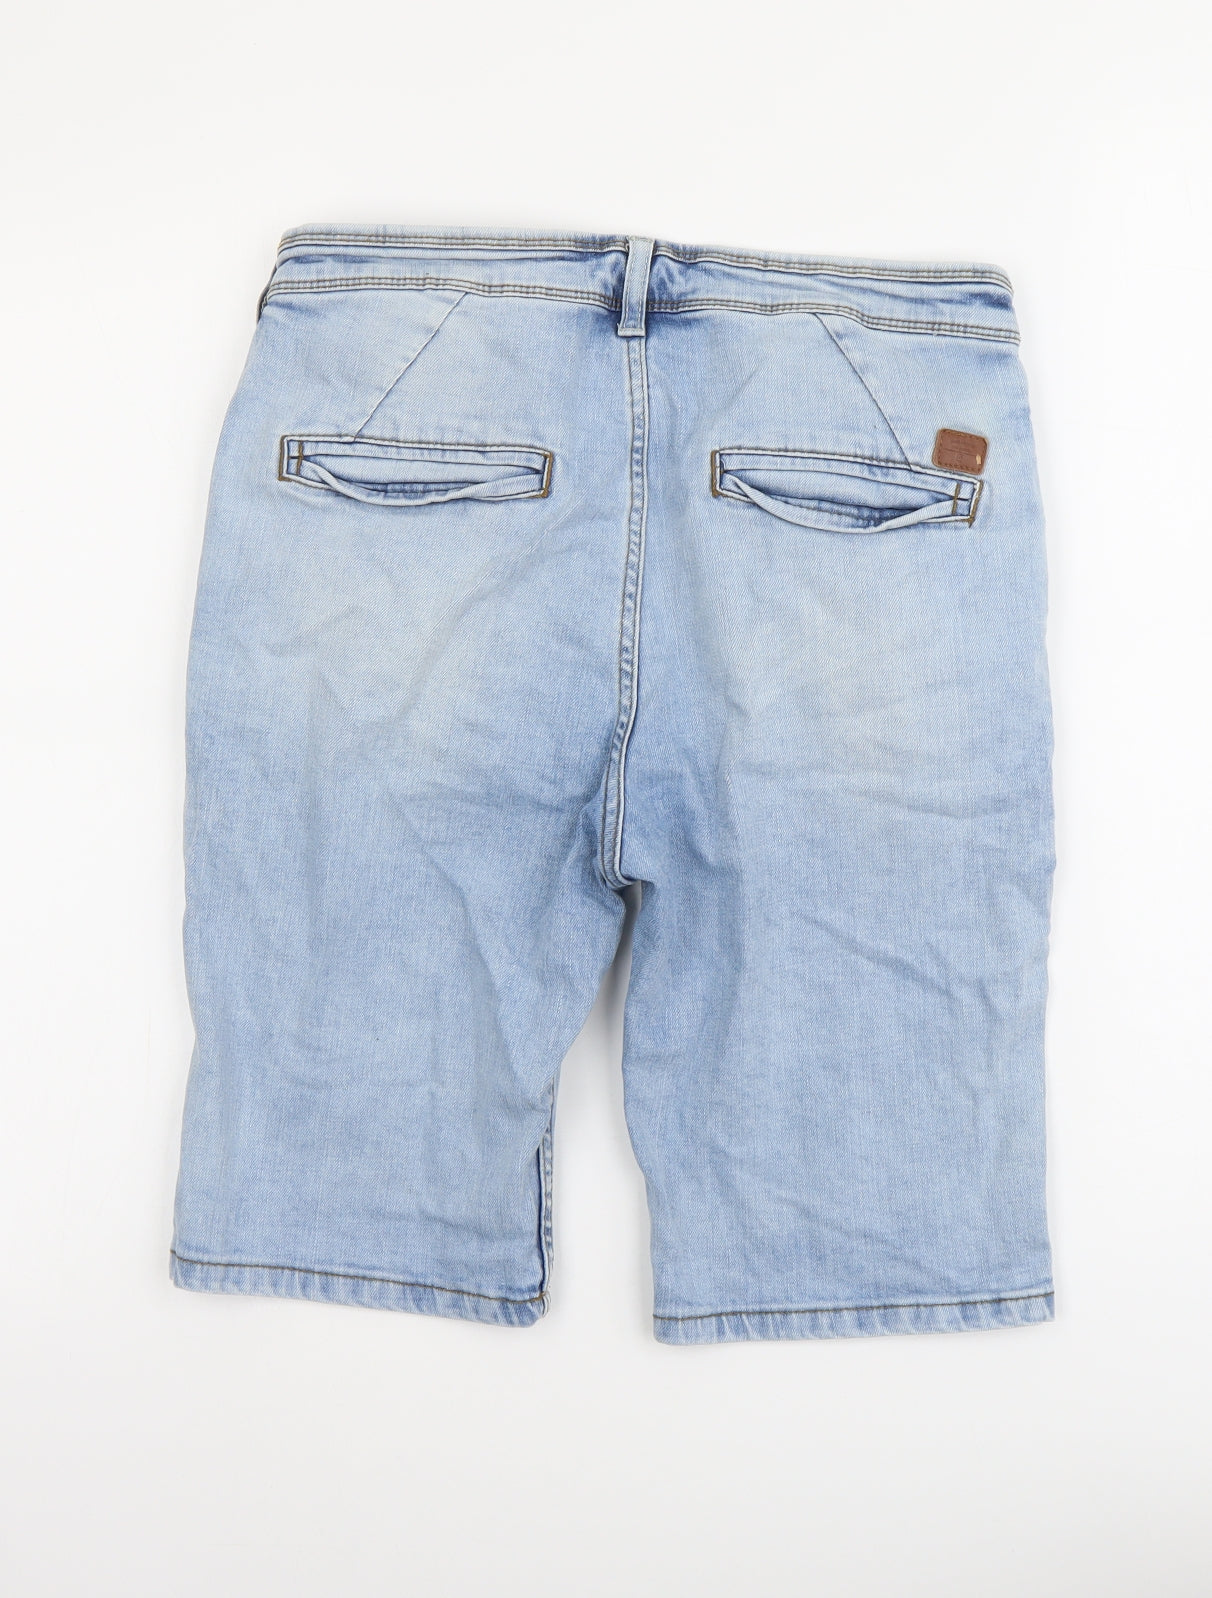 Zara Mens Blue Cotton Bermuda Shorts Size M L10 in Regular Button